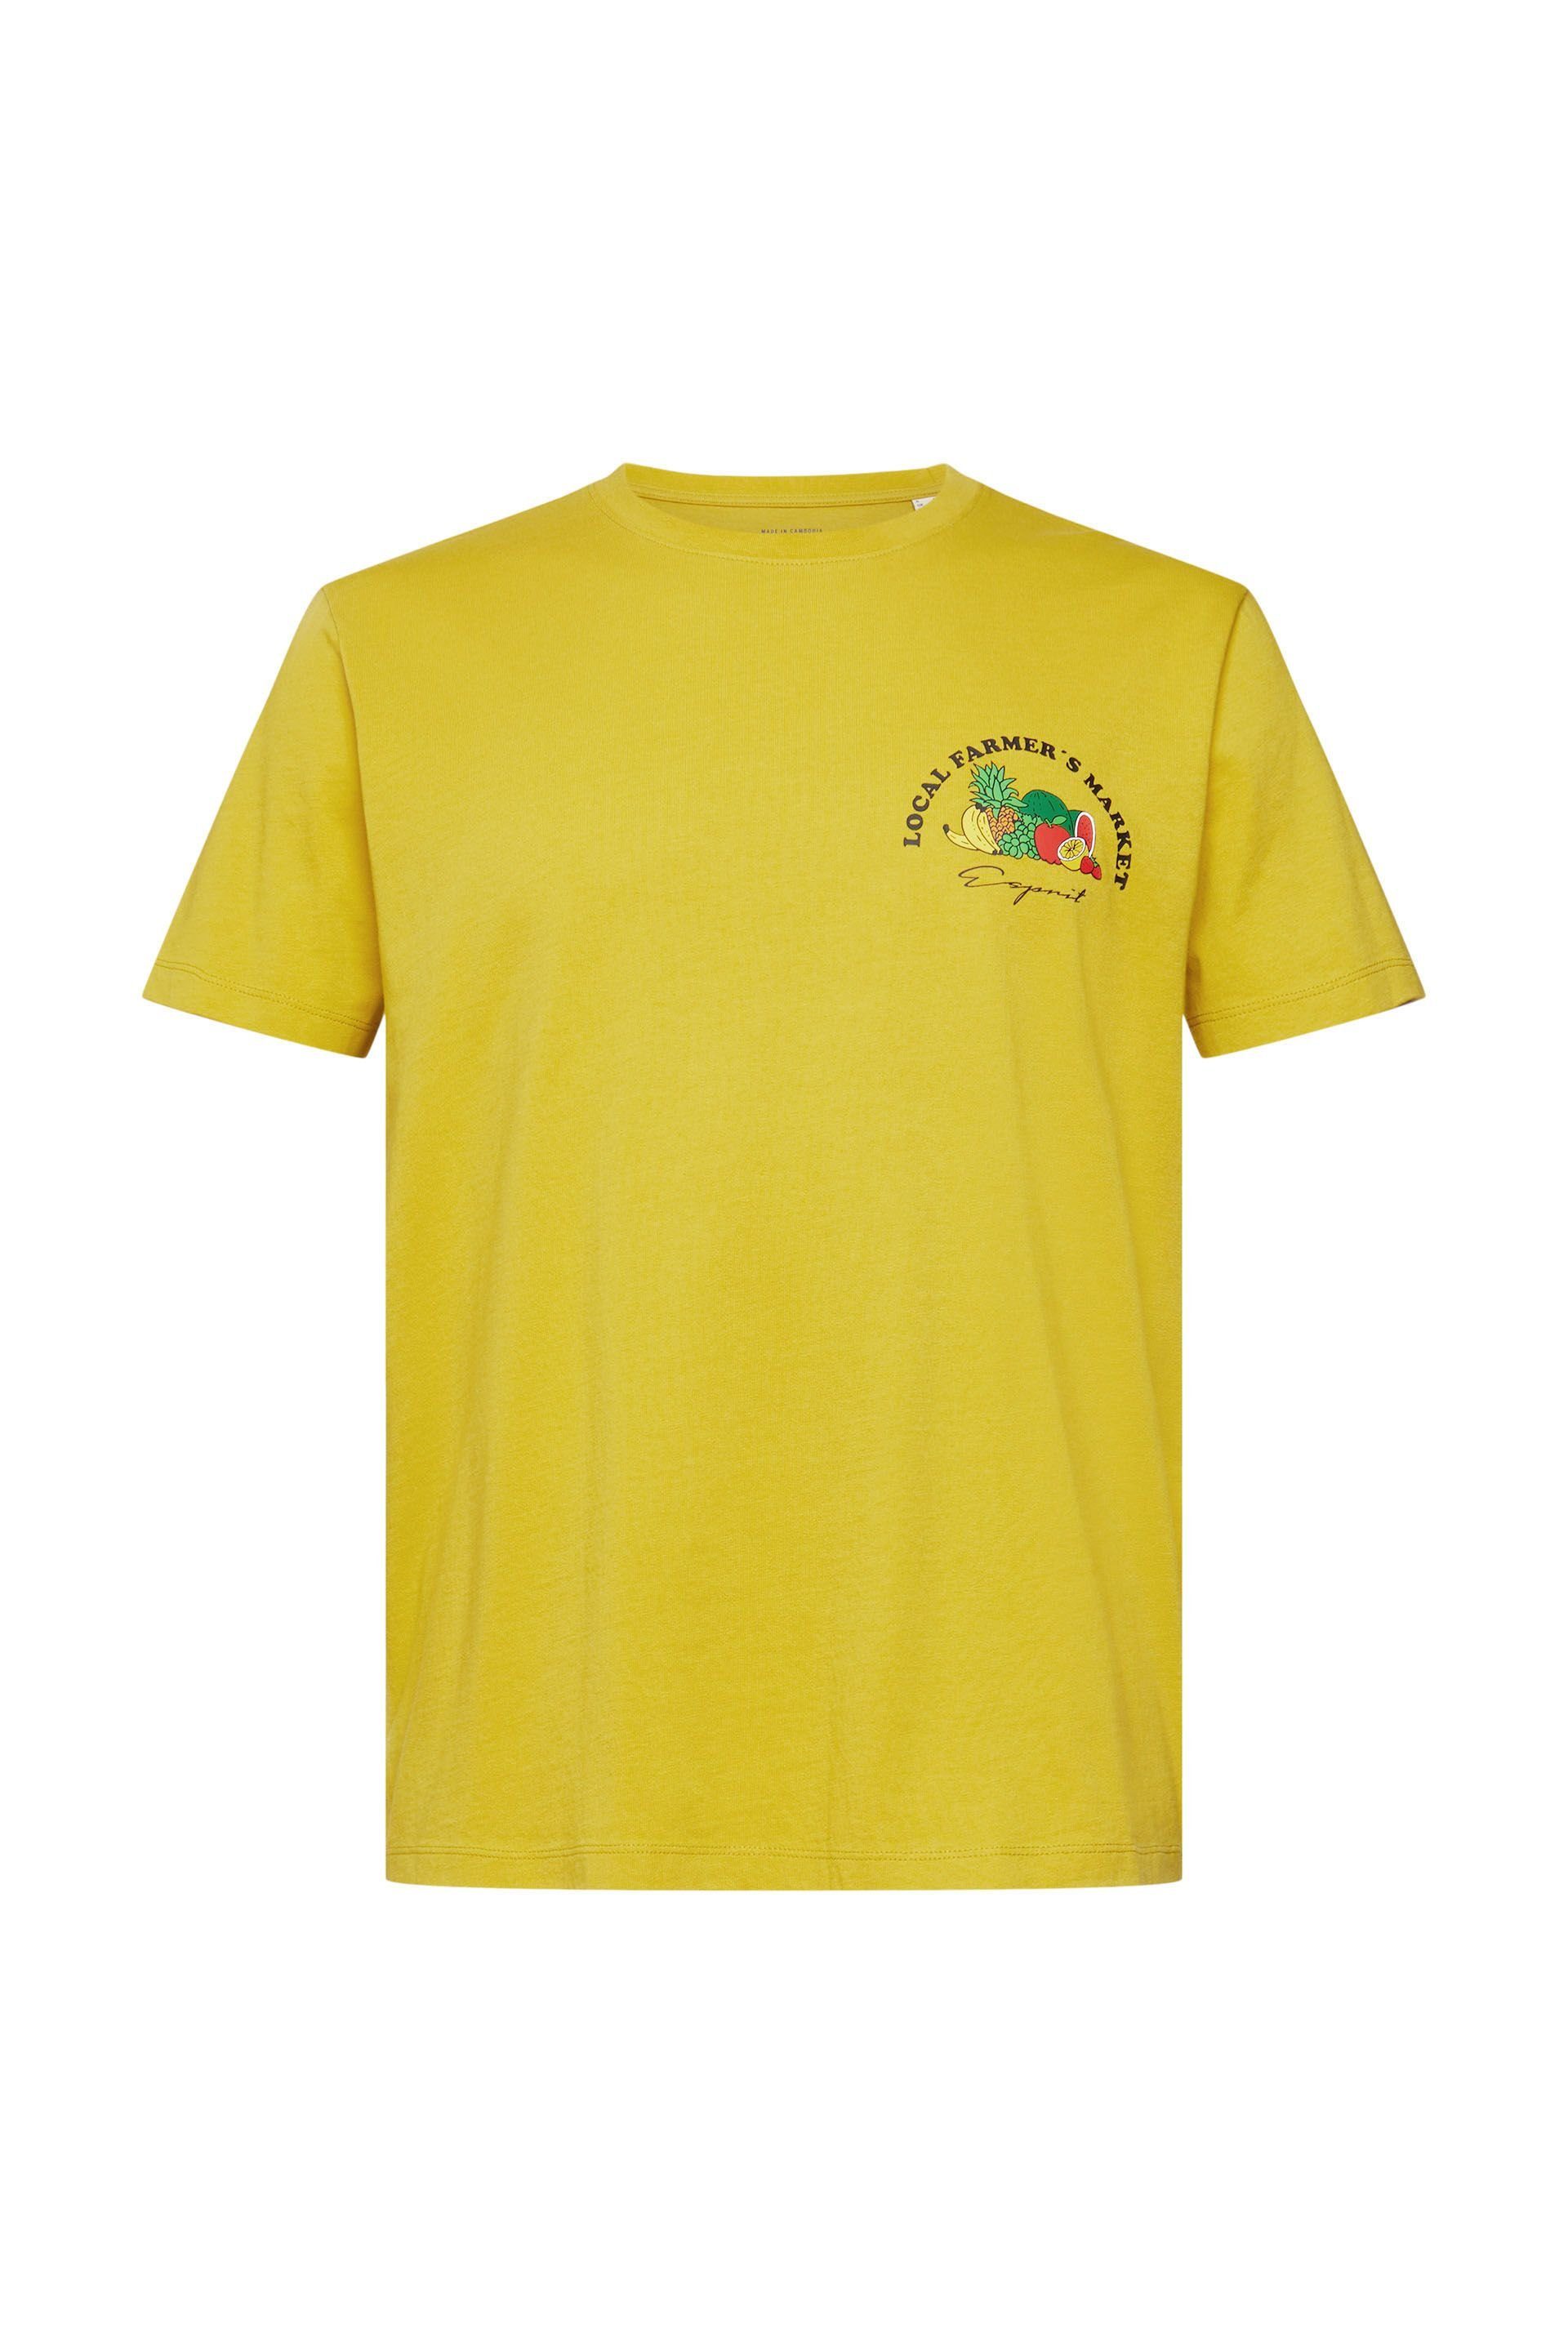 dusty T-Shirt Esprit yellow